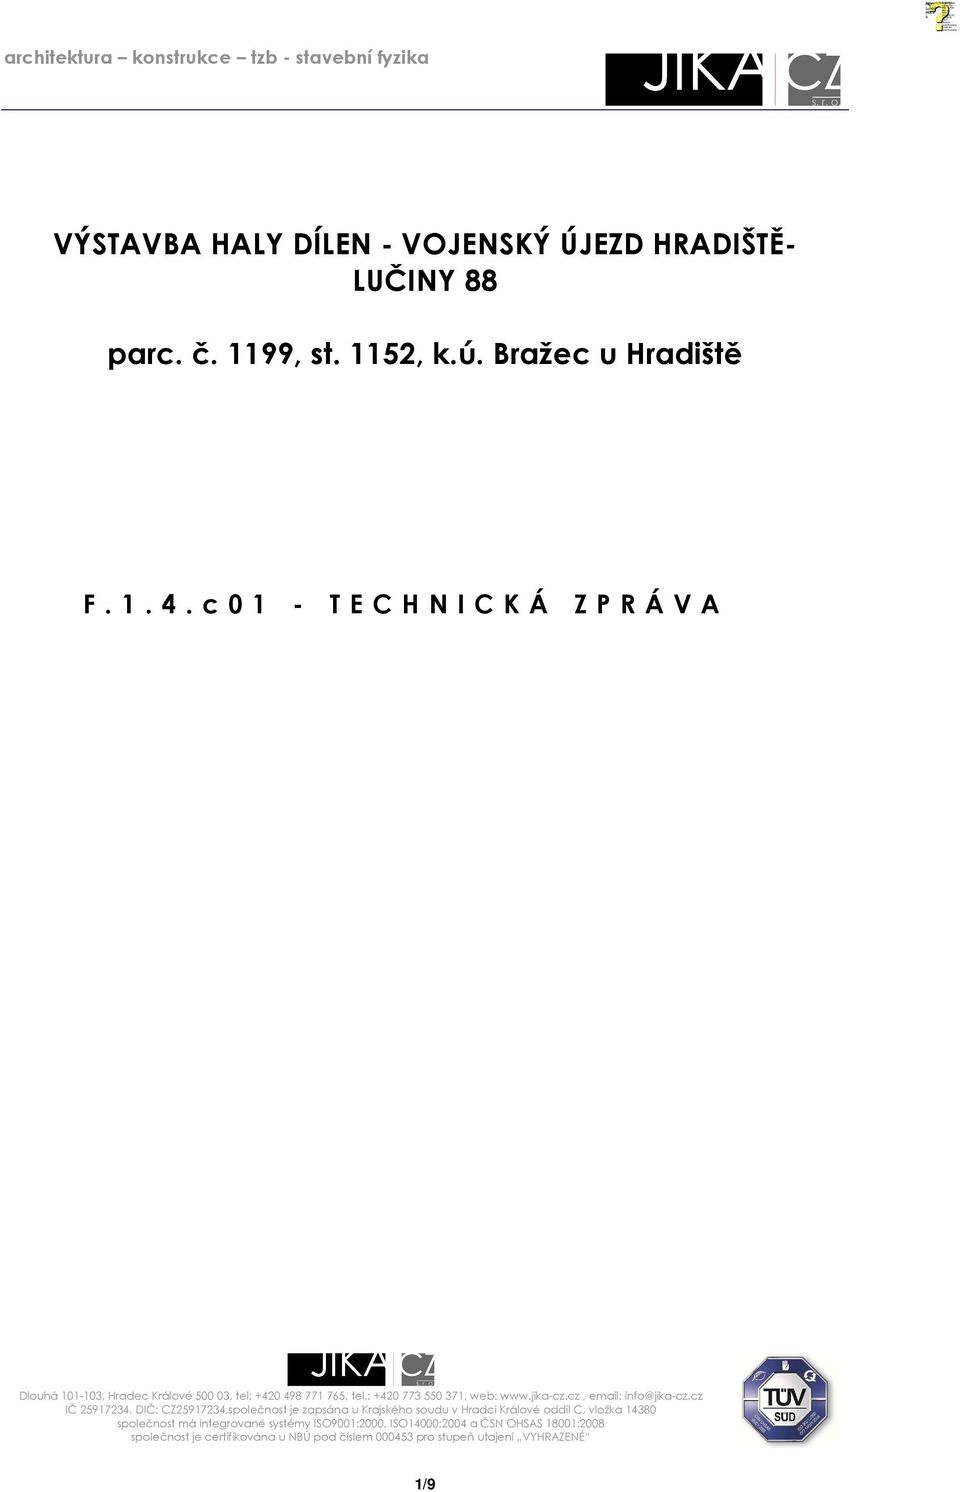 1152, k.ú. Bražec u Hradiště F. 1. 4.